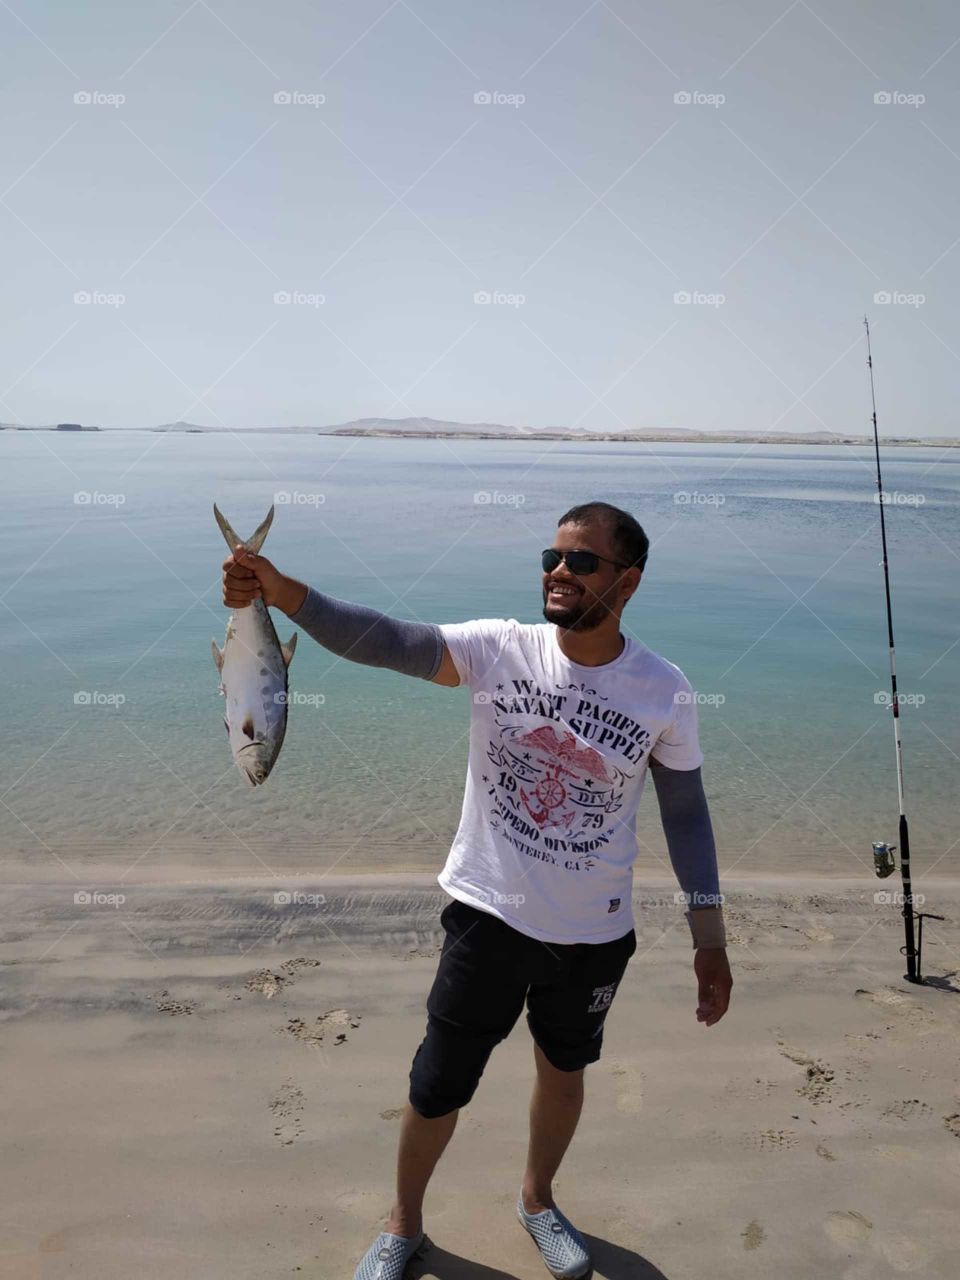 amazing see fishing